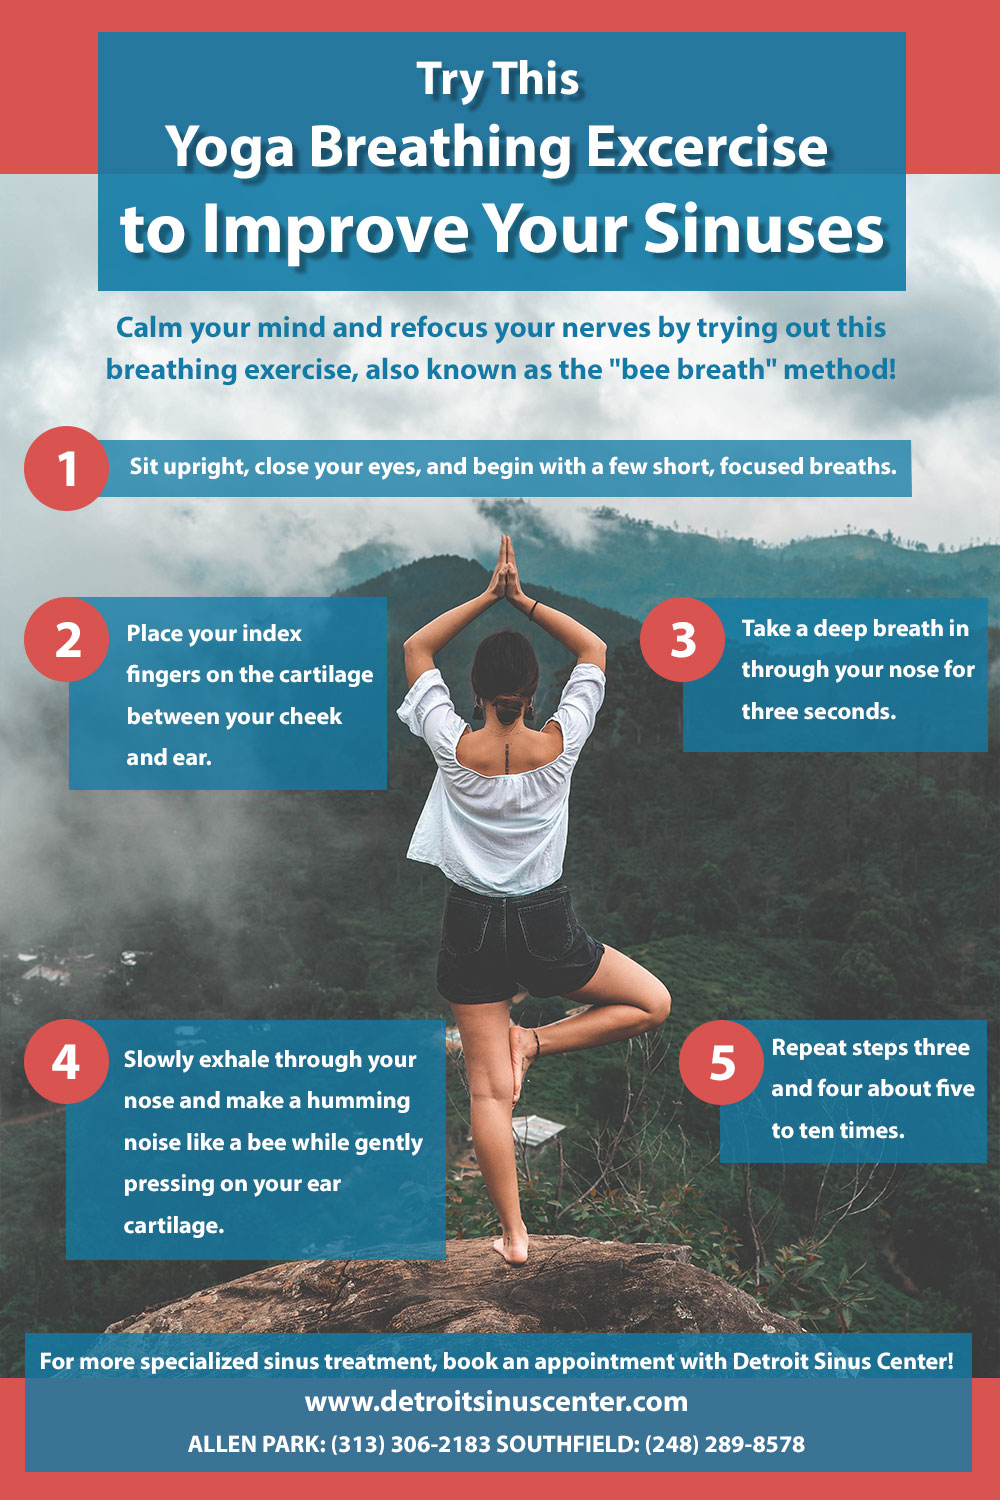 Yoga for Sinus: 6 Best Yoga Poses for Sinus Relief | Cool yoga poses, Yoga  poses, Sinus relief